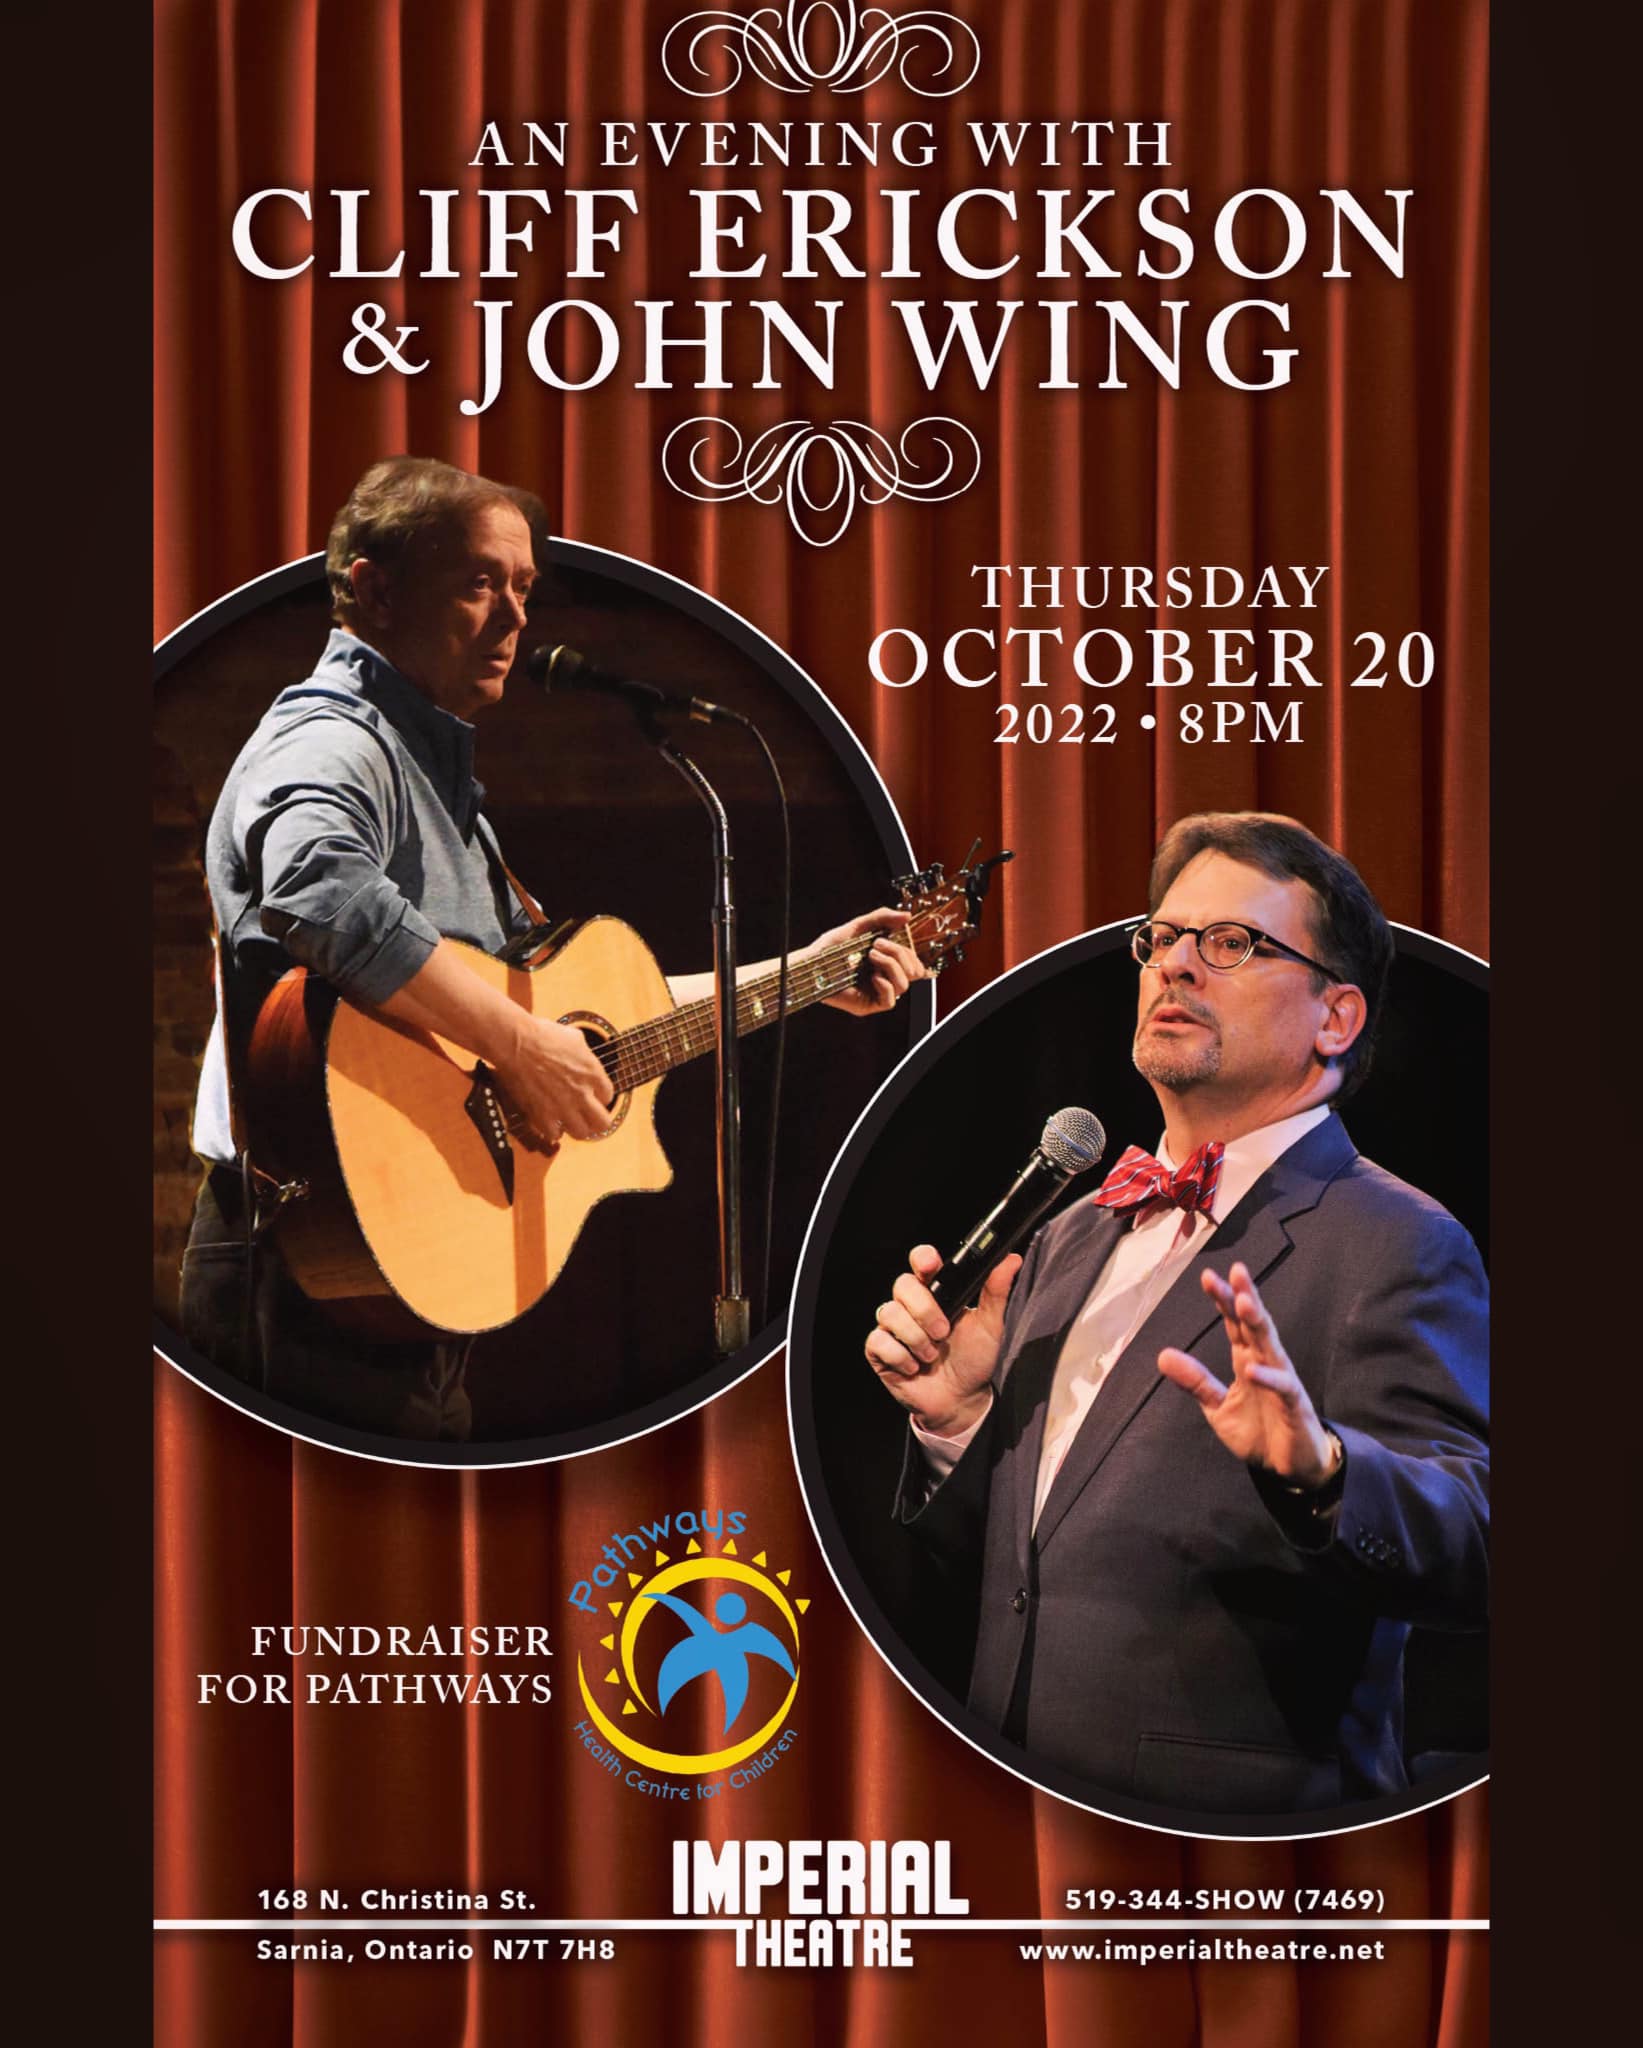 An Evening With Cliff Erickson & John Wing